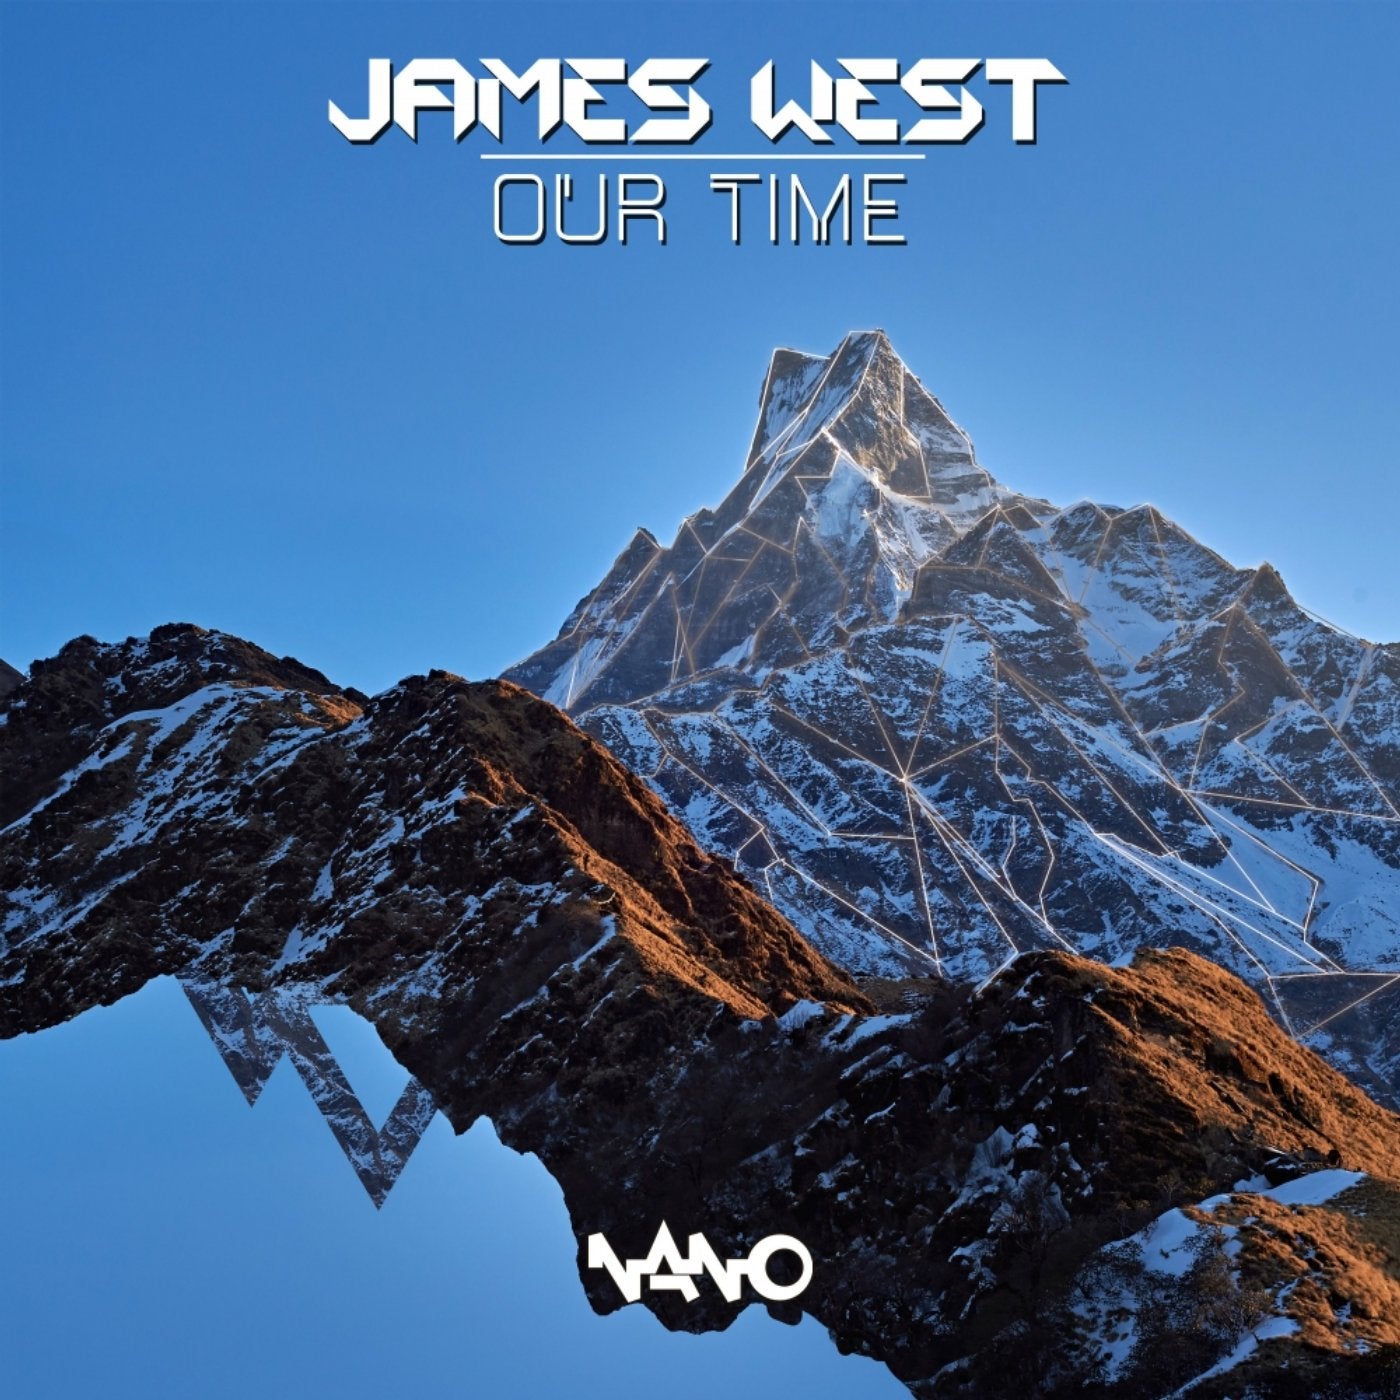 Our time. Jame time. James flac